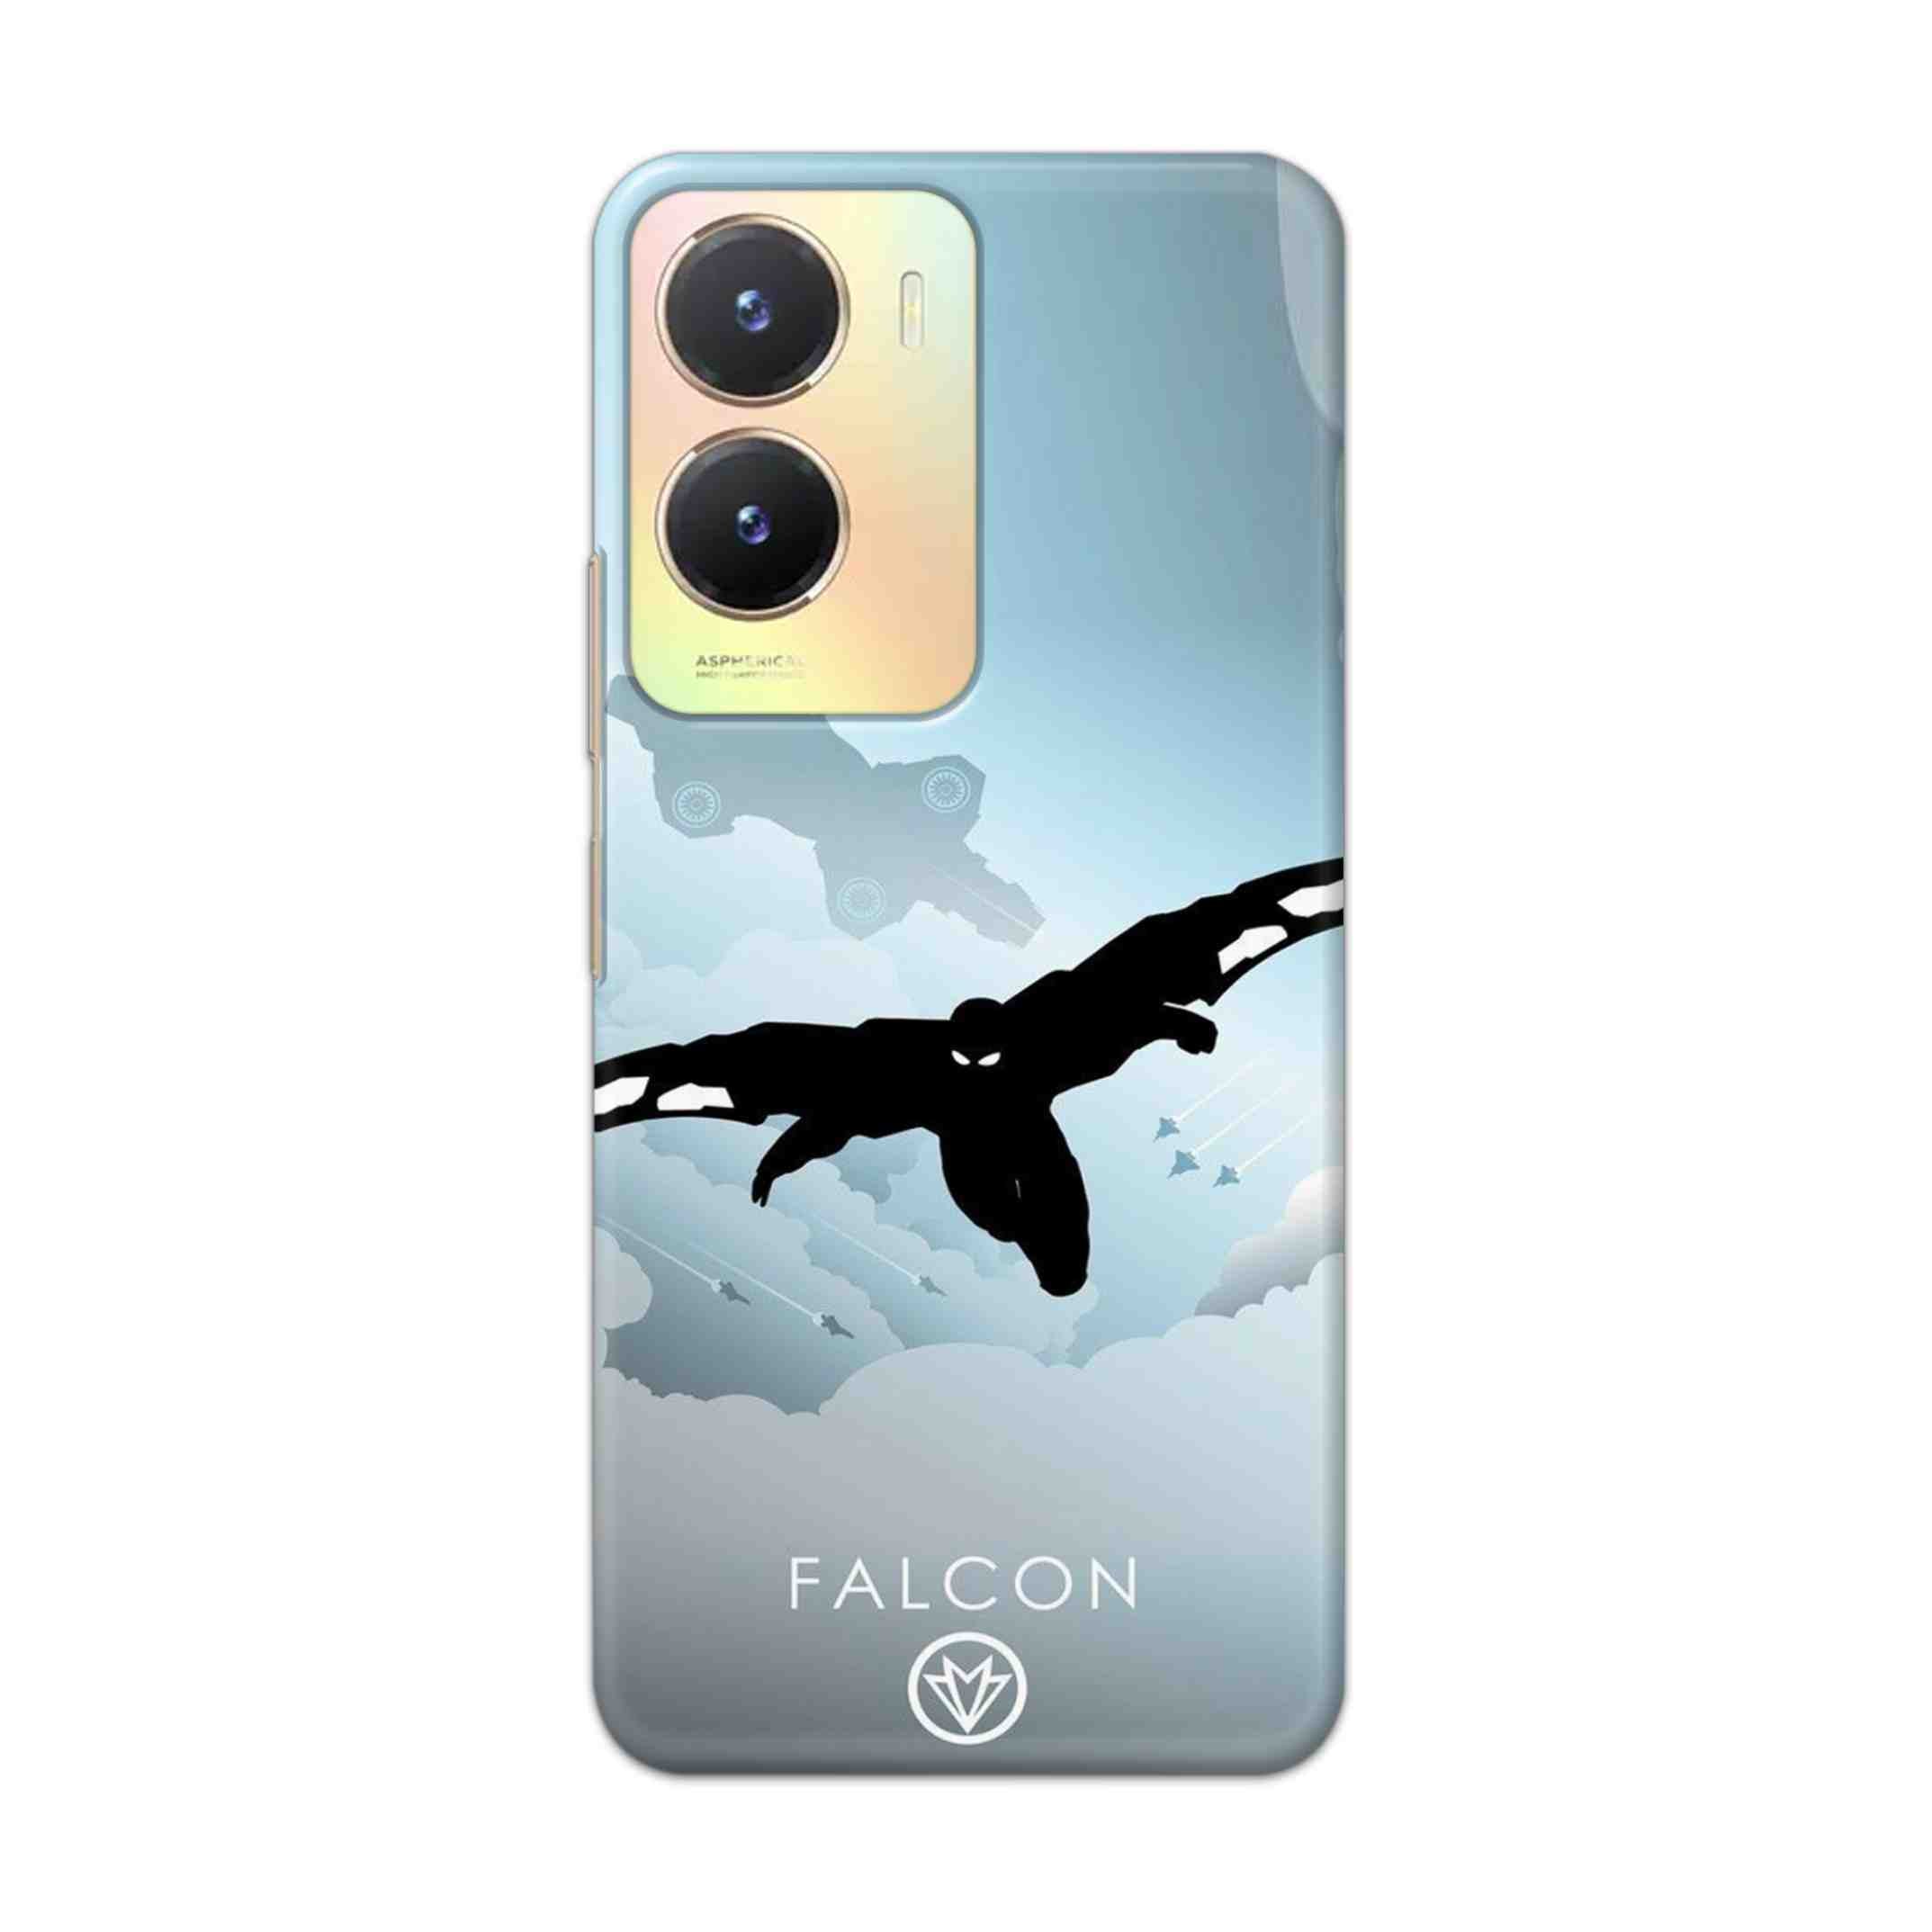 Buy Falcon Hard Back Mobile Phone Case Cover For Vivo T2x Online